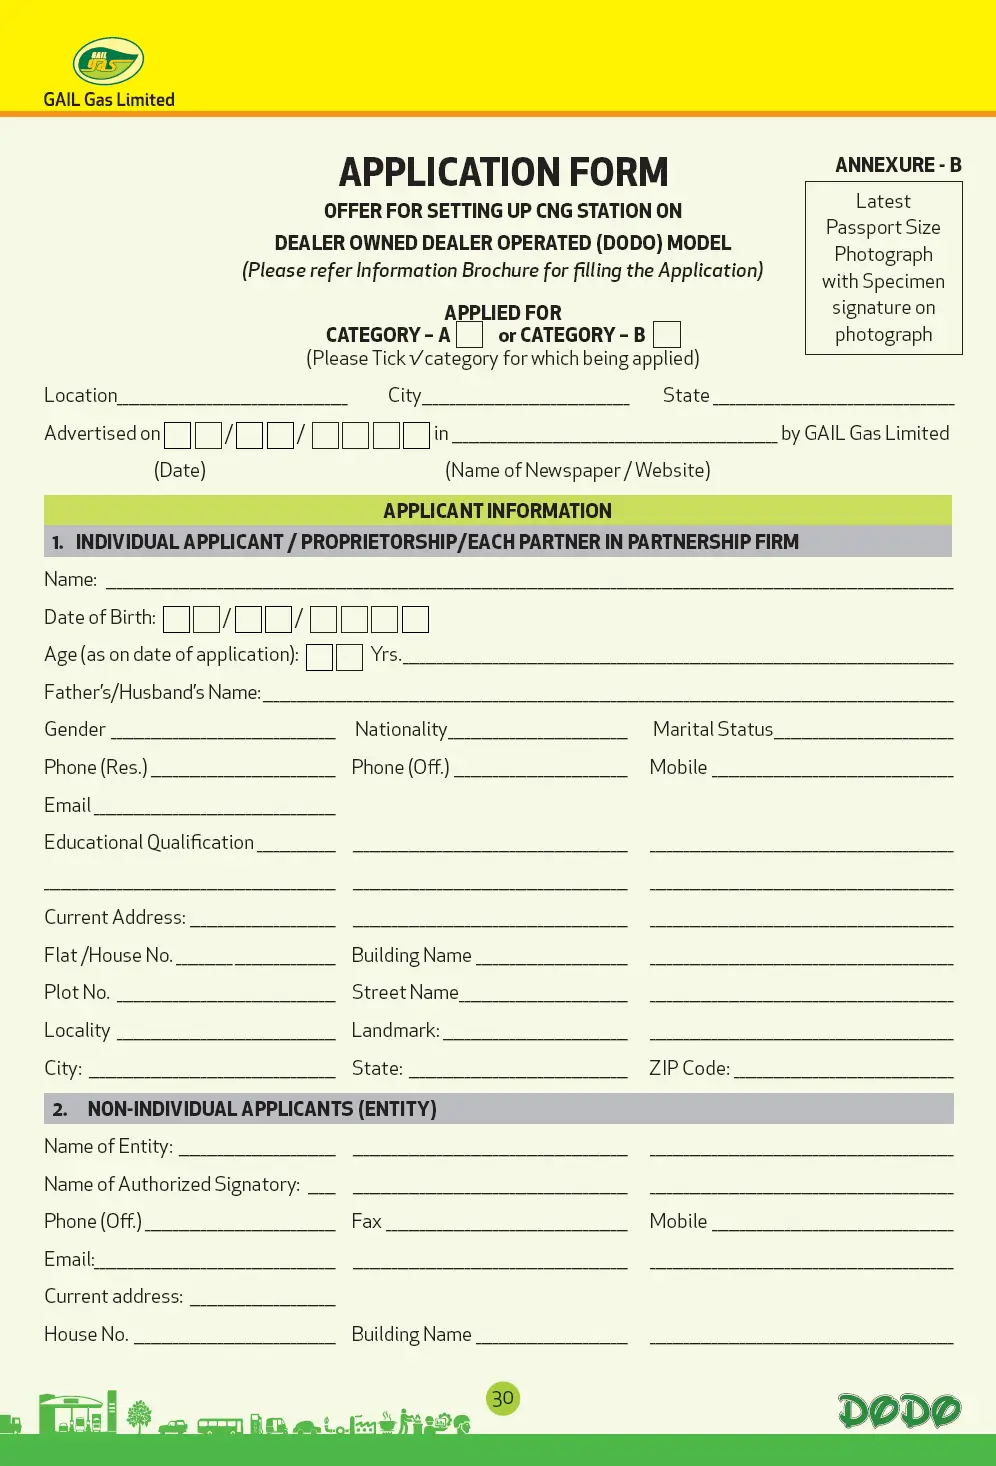 Gail gas CNG dealership application form